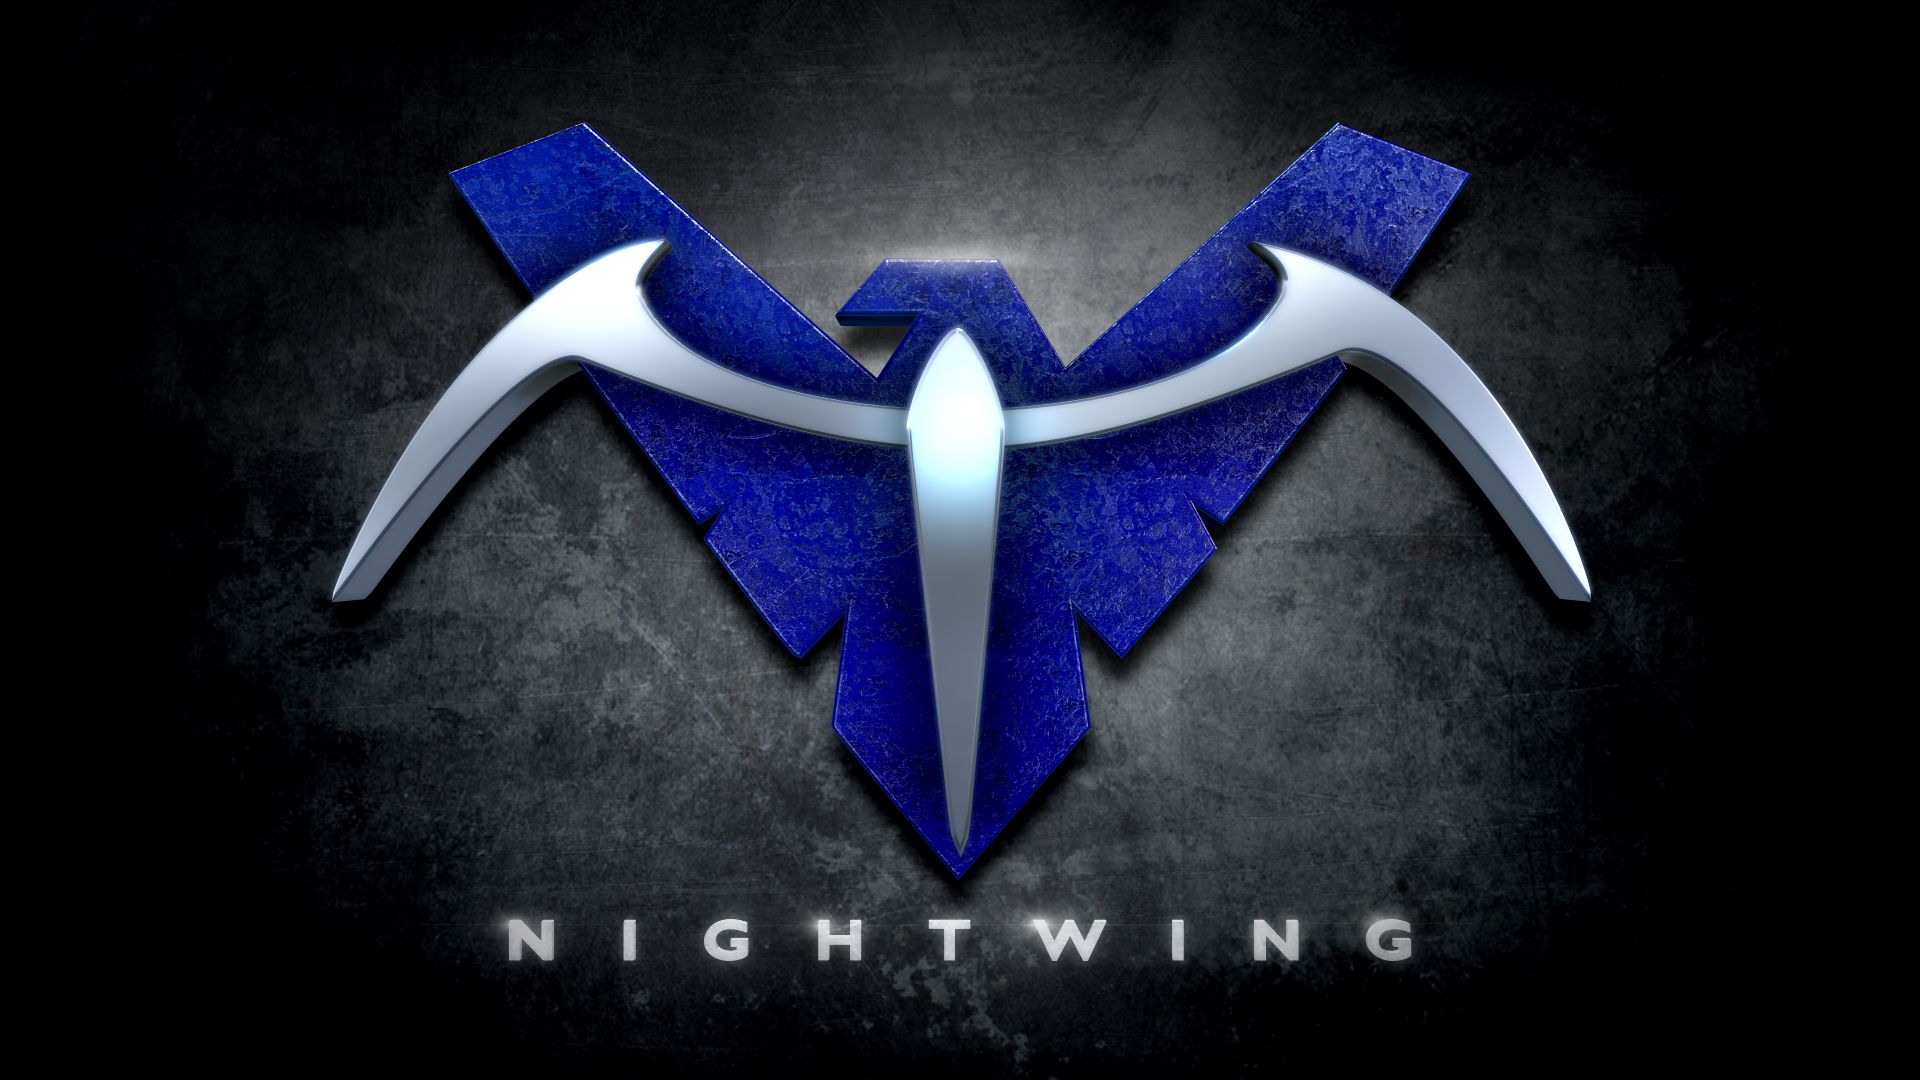 Free download Nightwing Logo Beloeil Jones [1920x1080] for your Desktop, Mobile & Tablet. Explore Nightwing Logo Wallpaper. Nightwing Wallpaper, Nightwing iPhone Wallpaper, Nightwing HD Wallpaper